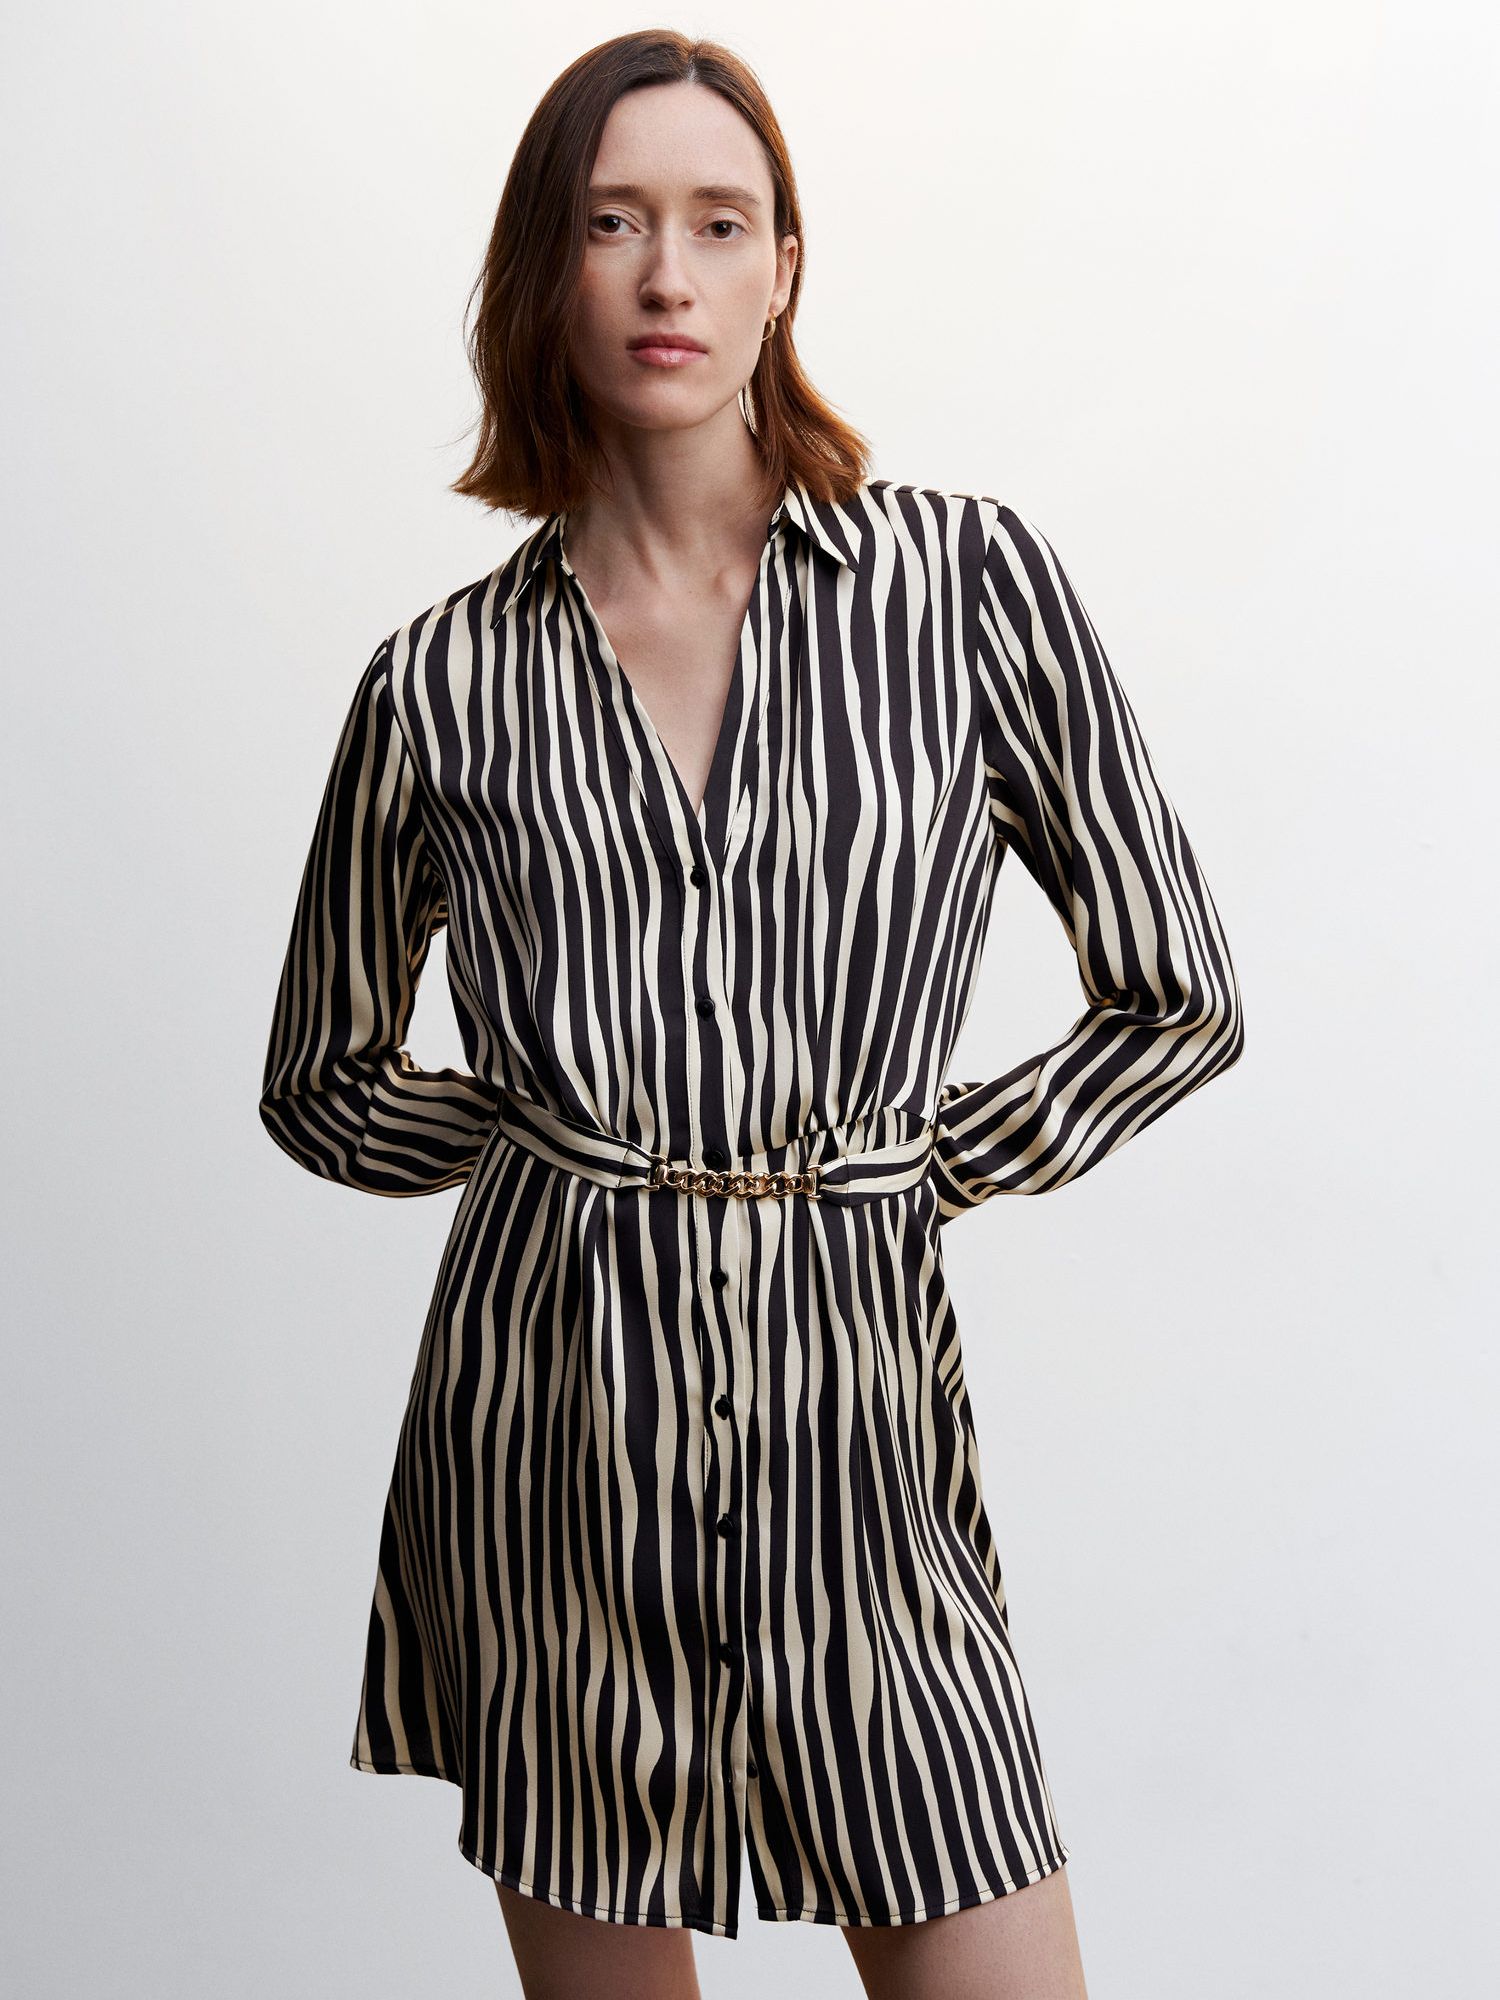 Mango Ninette Animal Stripe Satin Shirt Dress, Black/White, 4